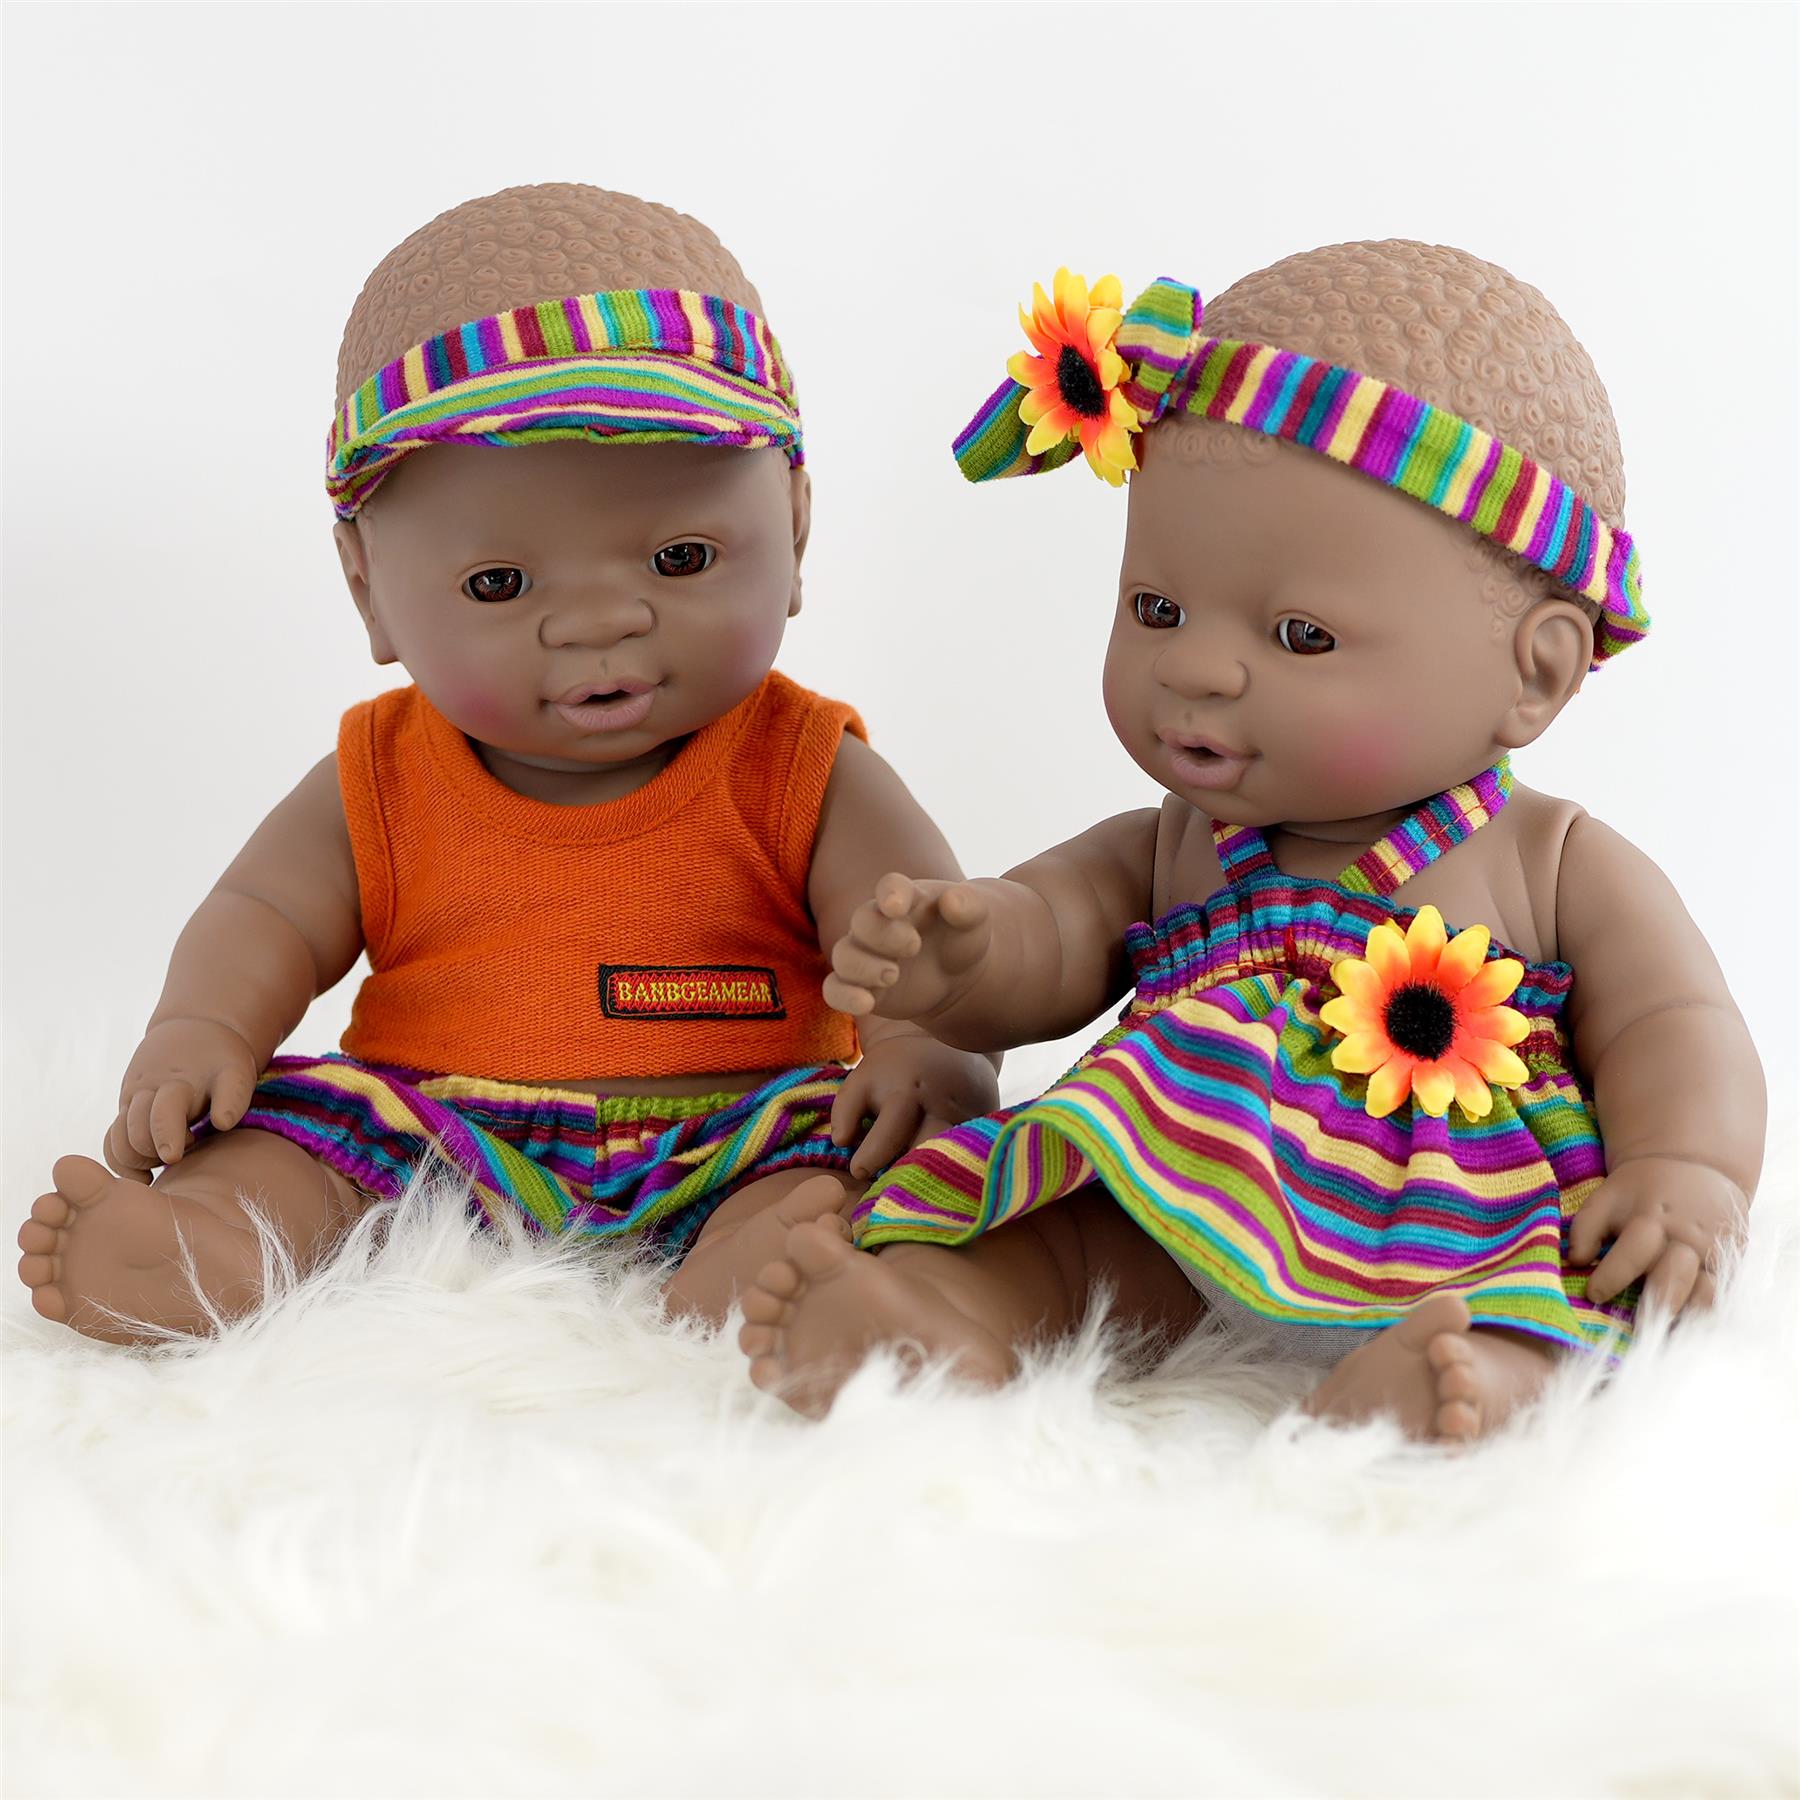 Black Twin Baby Dolls - 12" by BiBi Doll - UKBuyZone